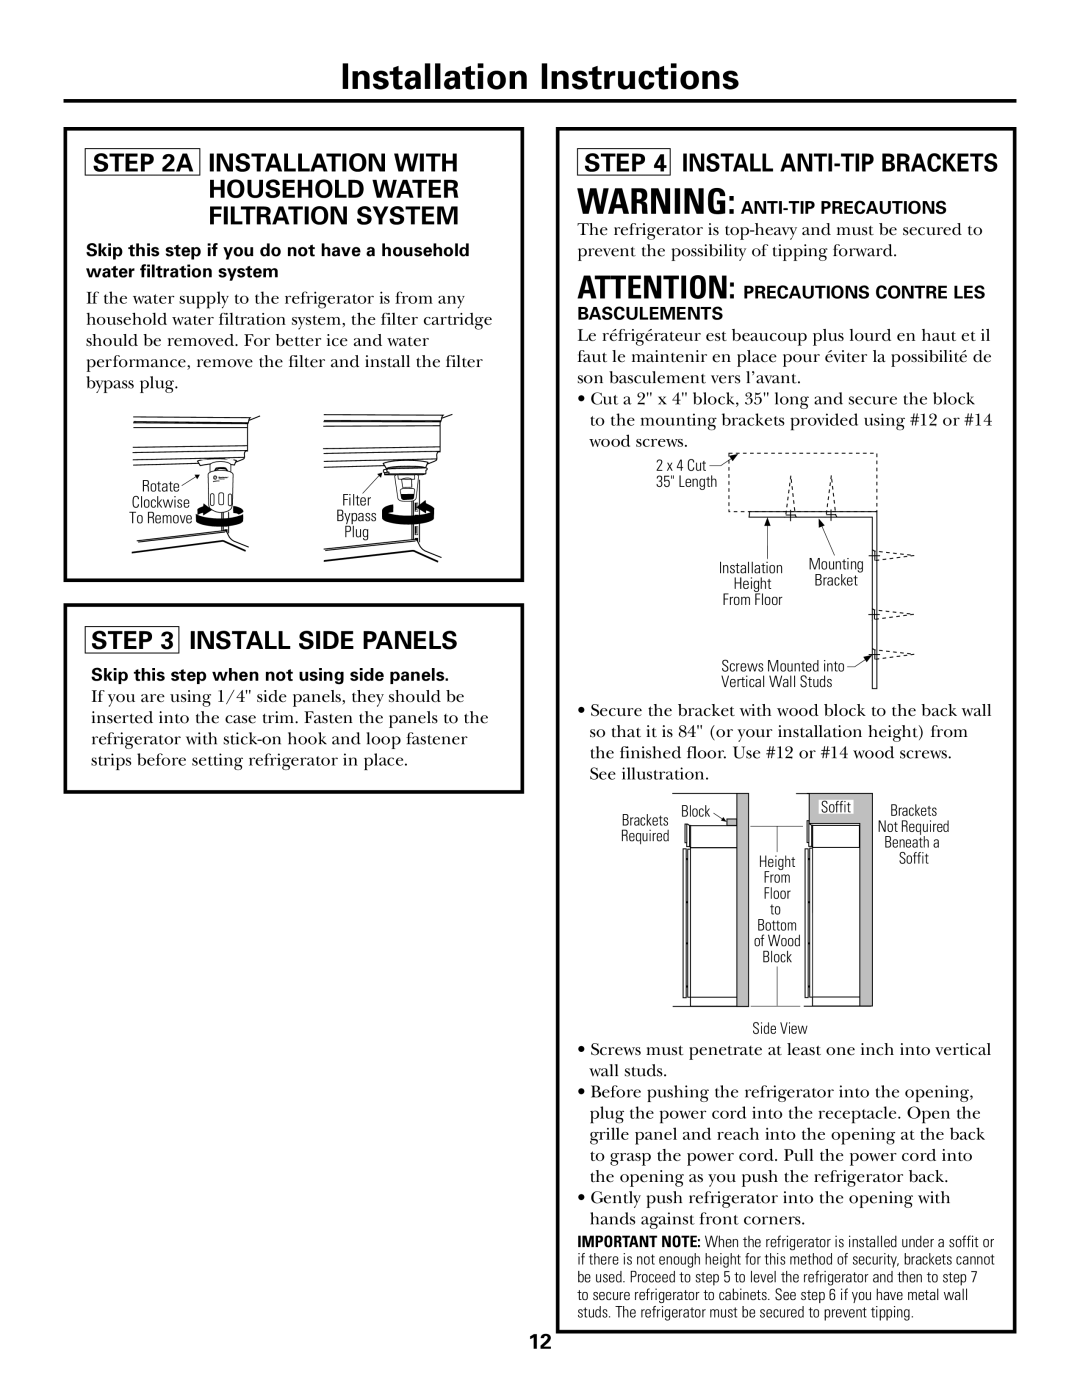 GE Monogram Side by Side Refrigerators Install Side Panels, Install Anti-Tip Brackets, Warning Anti-Tip Precautions 